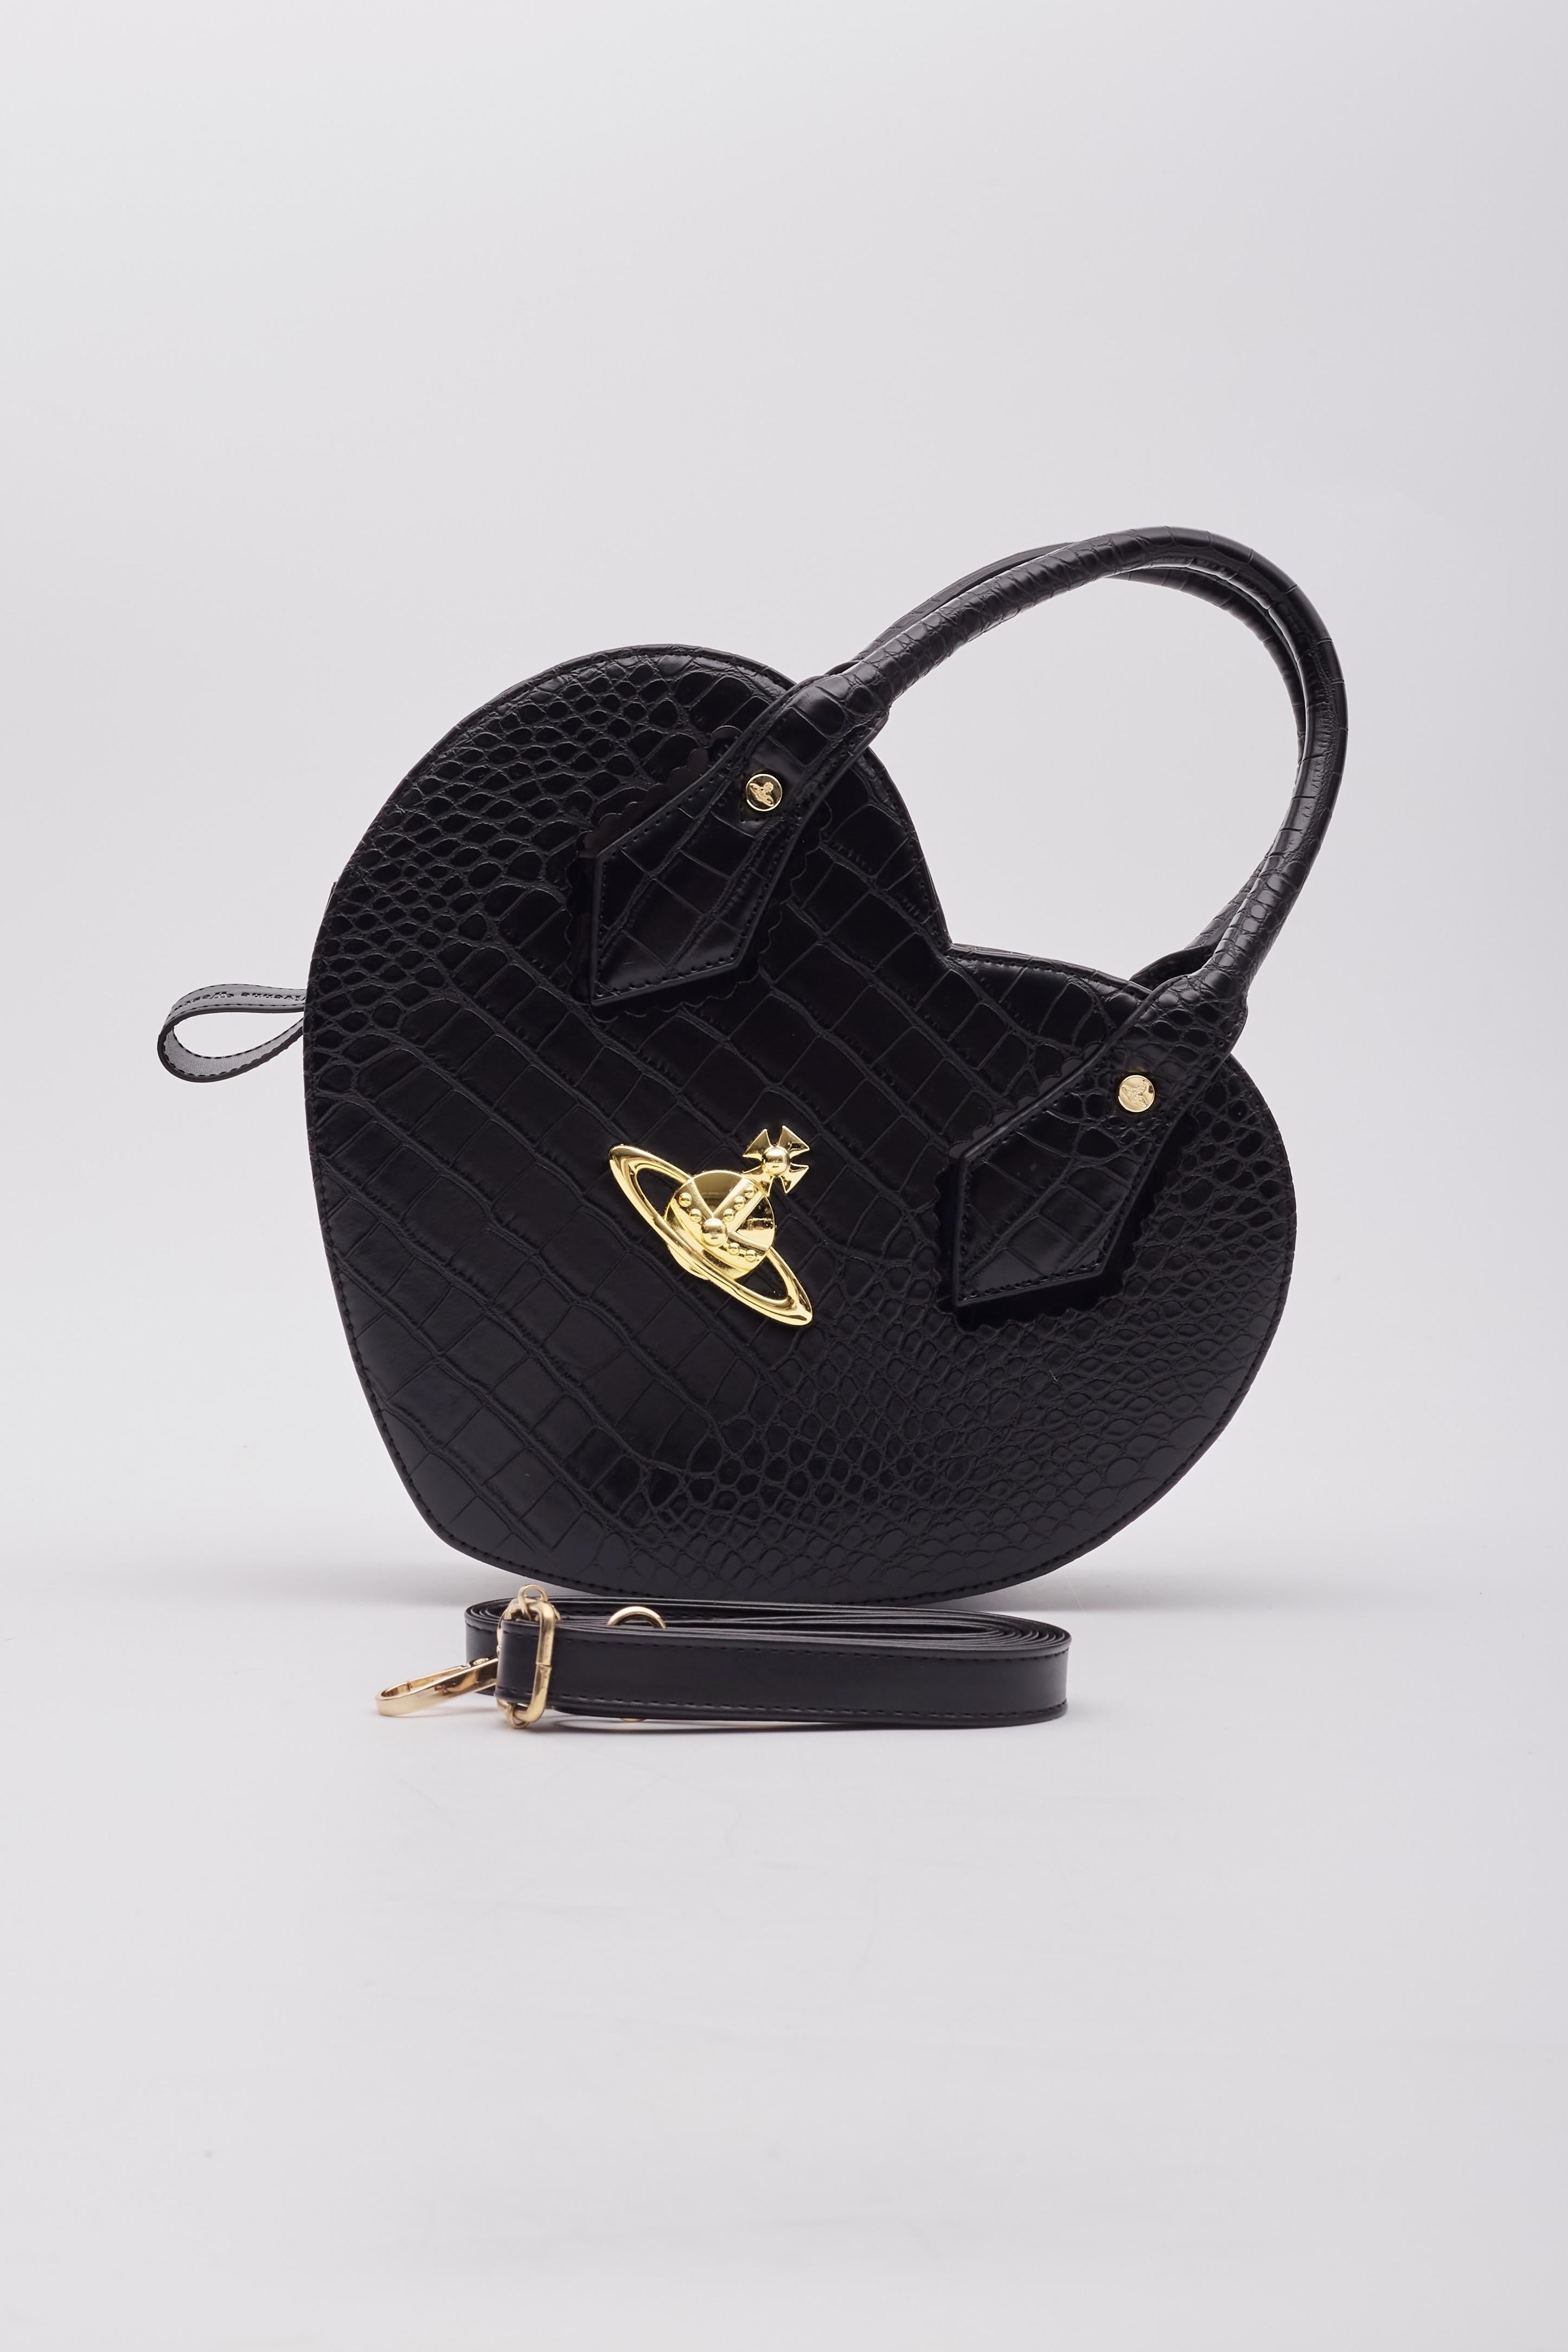 Vivienne Westwood Black Croc Embossed Chancery Heart Handbag For Sale 7